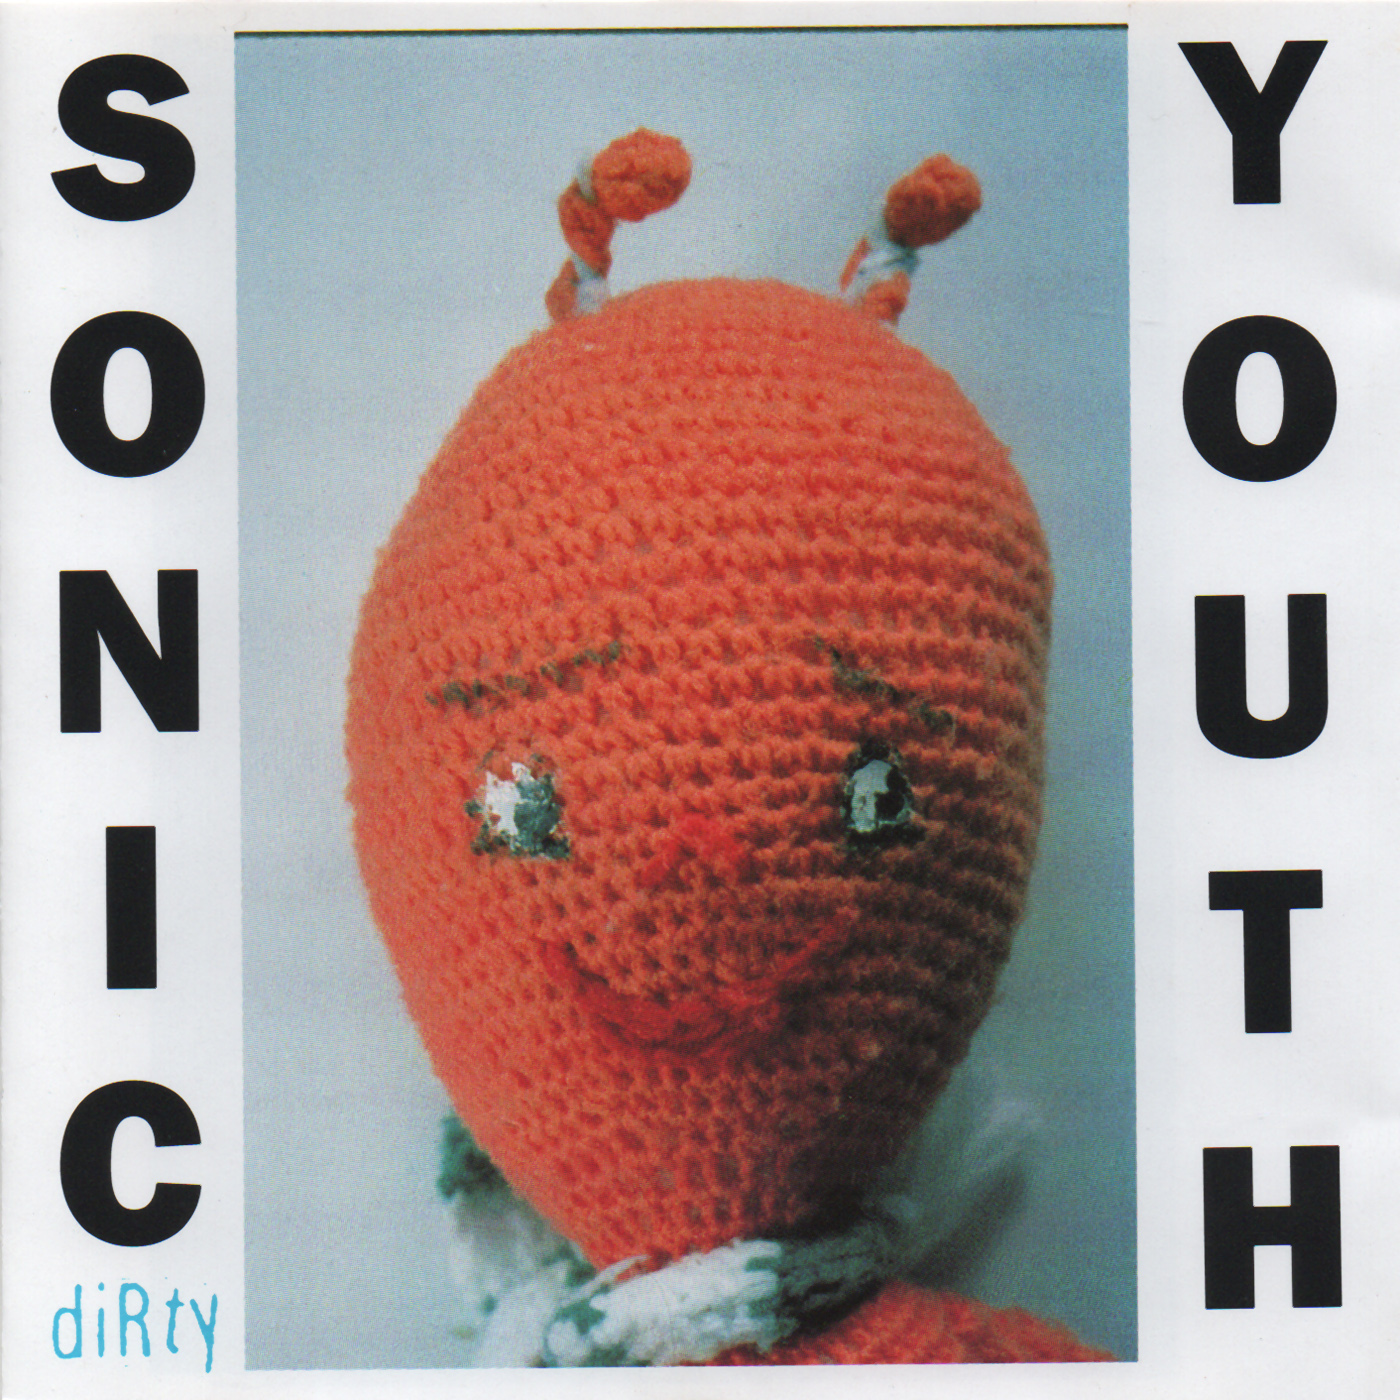 Sonic Youth - 1992 - Dirty [GFLD 19296]